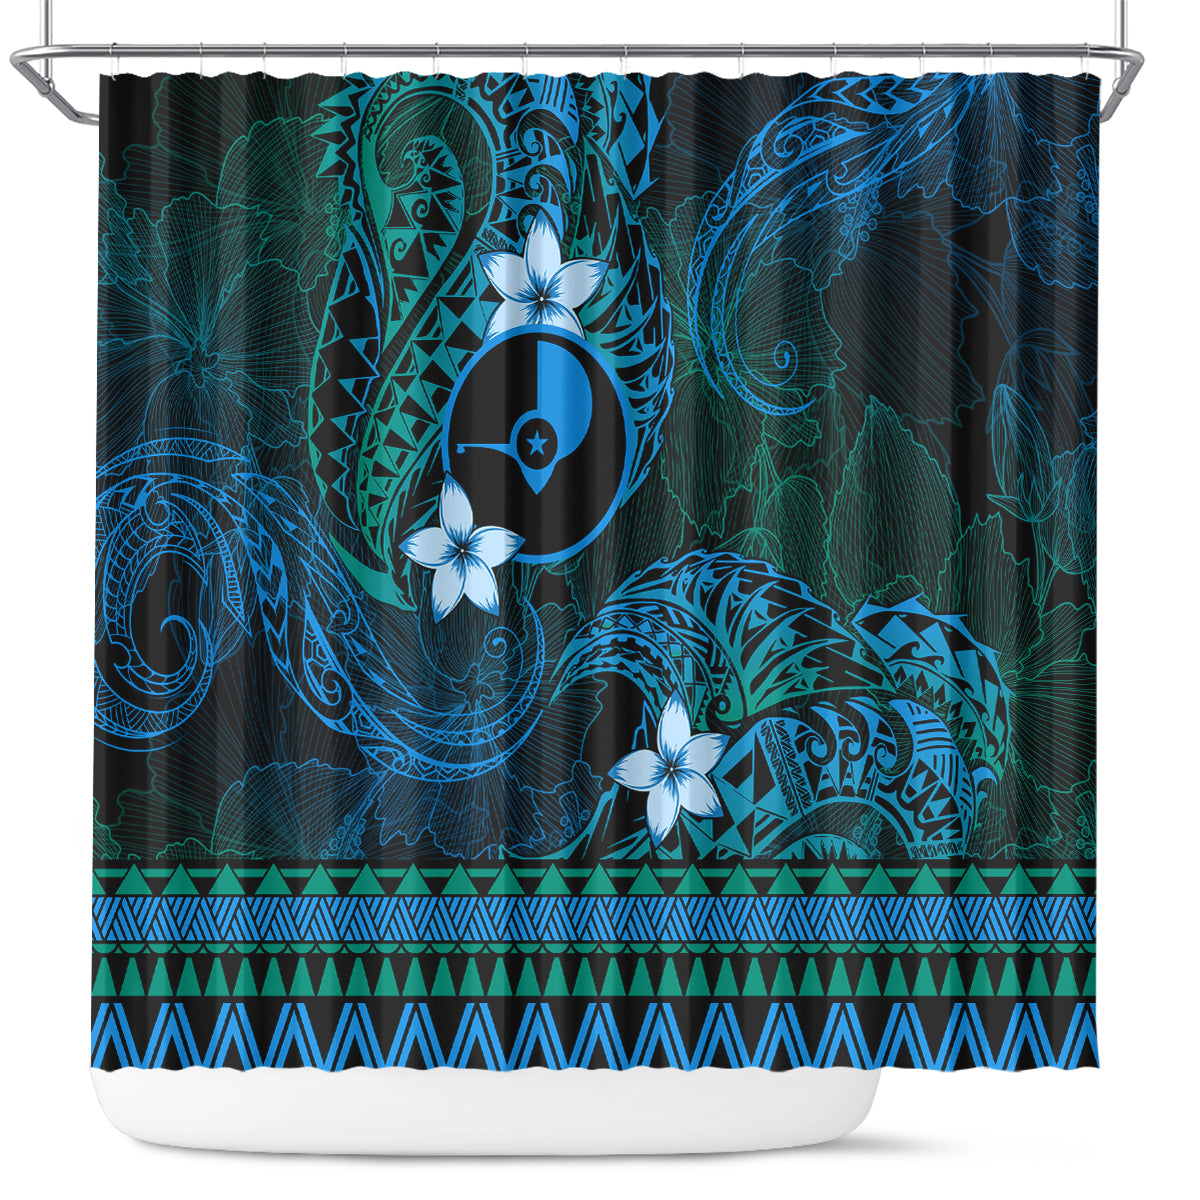 FSM Yap State Shower Curtain Tribal Pattern Ocean Version